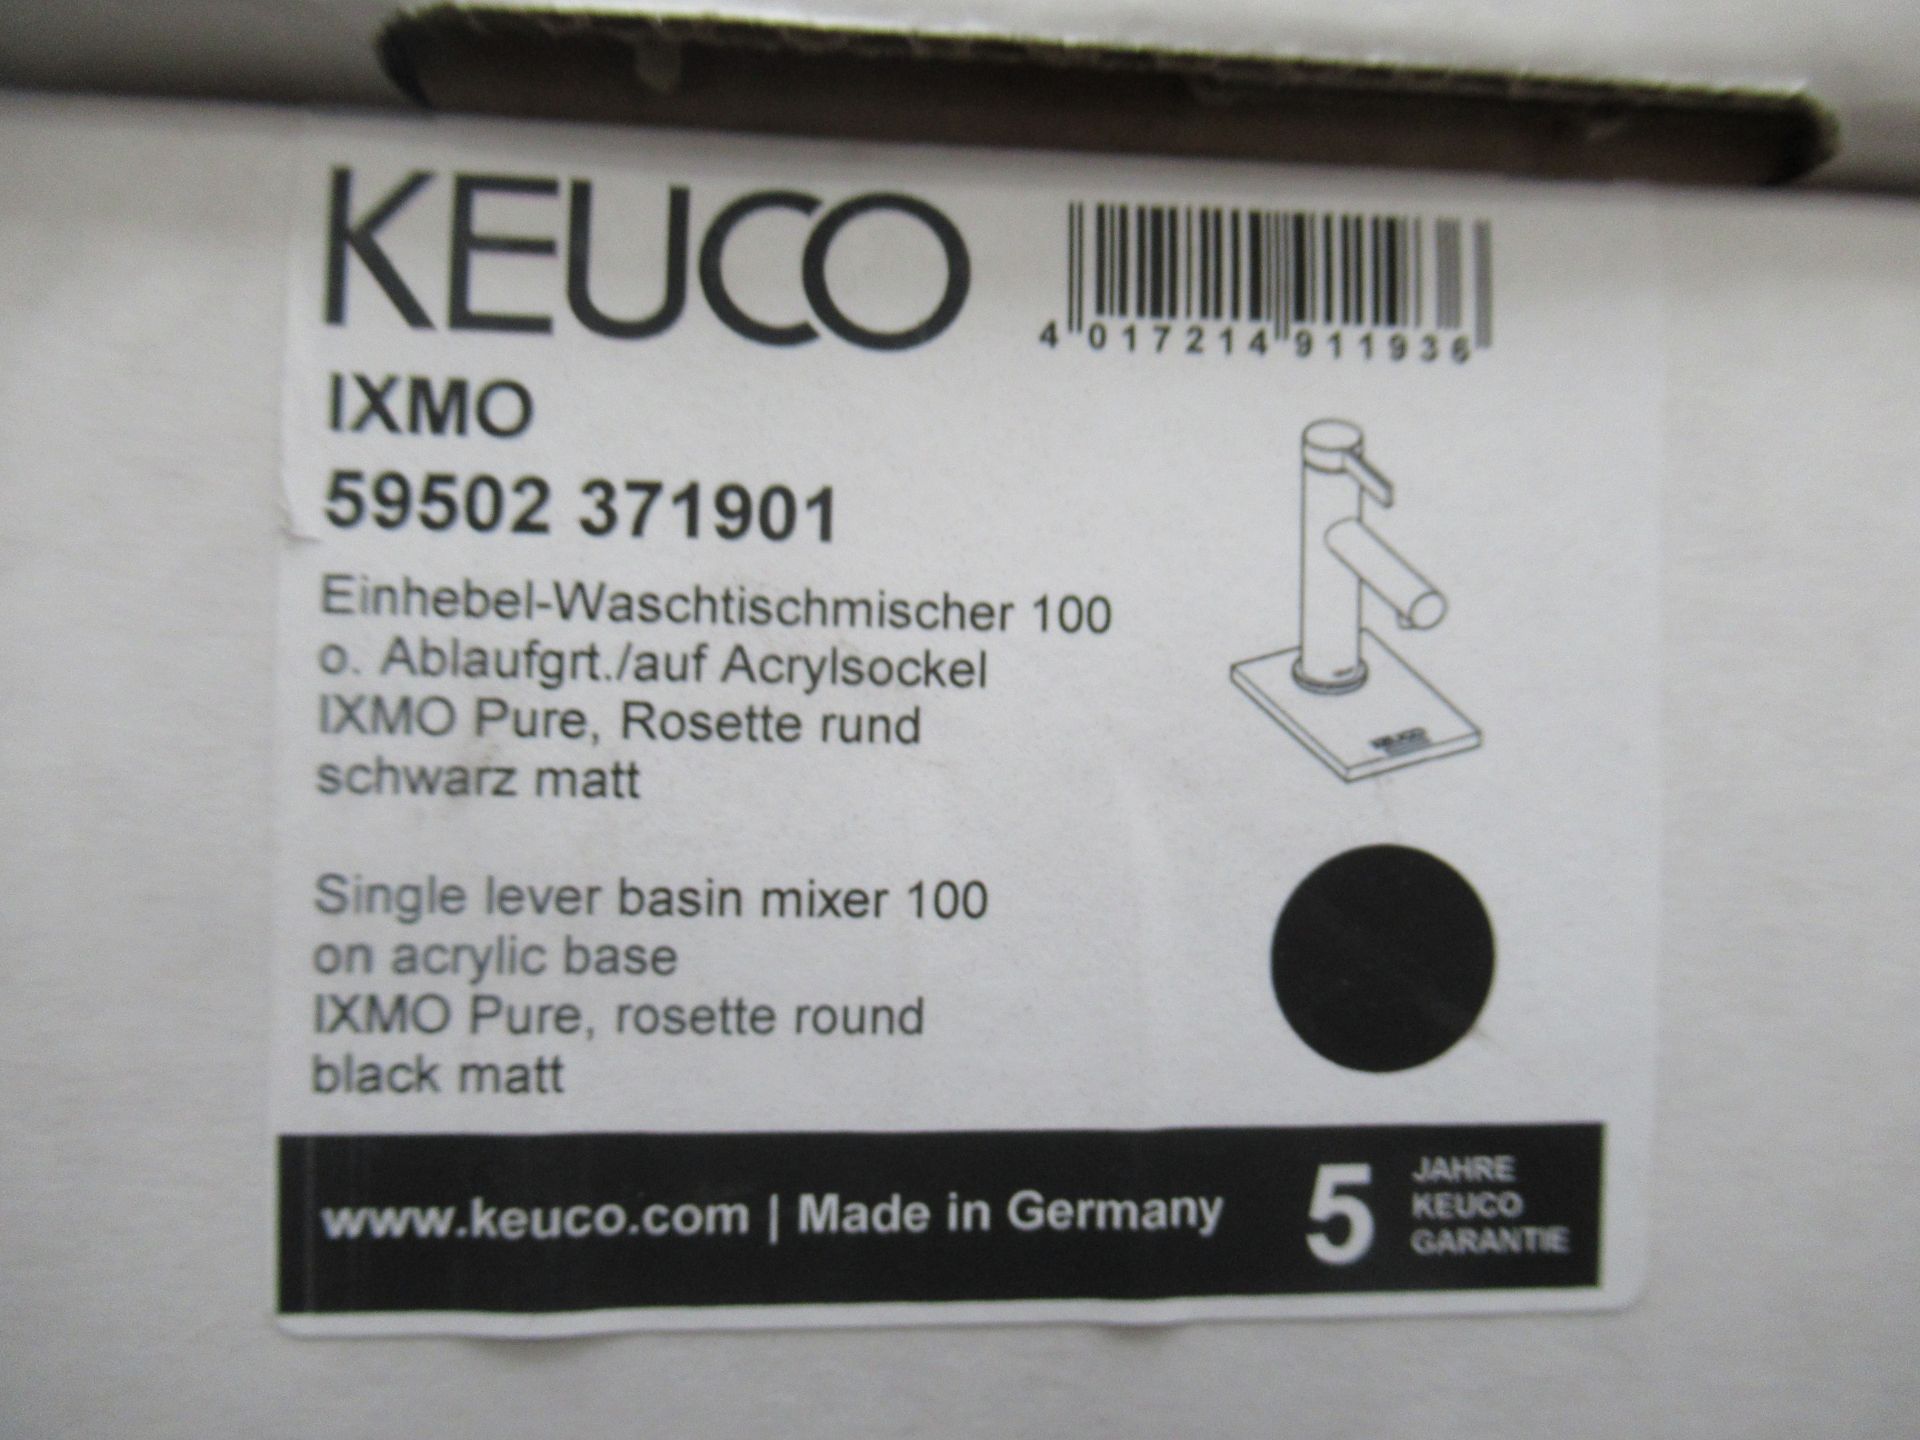 2 x Keuco IXMO Single Lever Basin Mixer 100-Tap, Black Matt, P/N 59502-371901 - Image 2 of 3